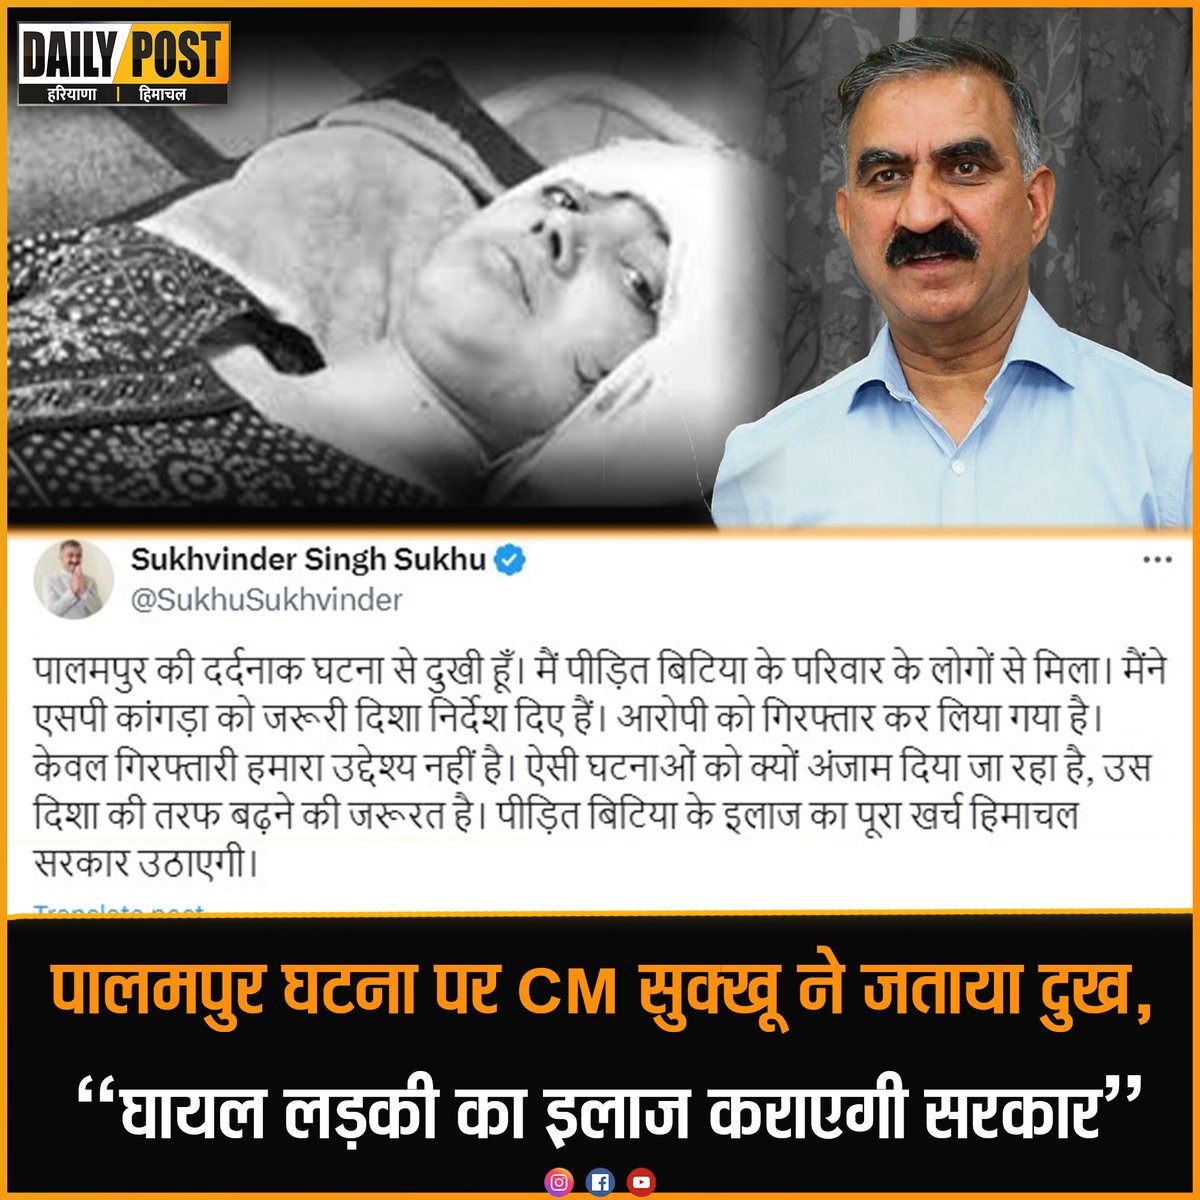 पालमपुर घटना पर CM सुक्खू ने जताया दुख,
'घायल लड़की का इलाज कराएगी सरकार”
.
.
.
.
#cmsukhu #himachal #himachalnews #palampur #Congress #himachalpradesh